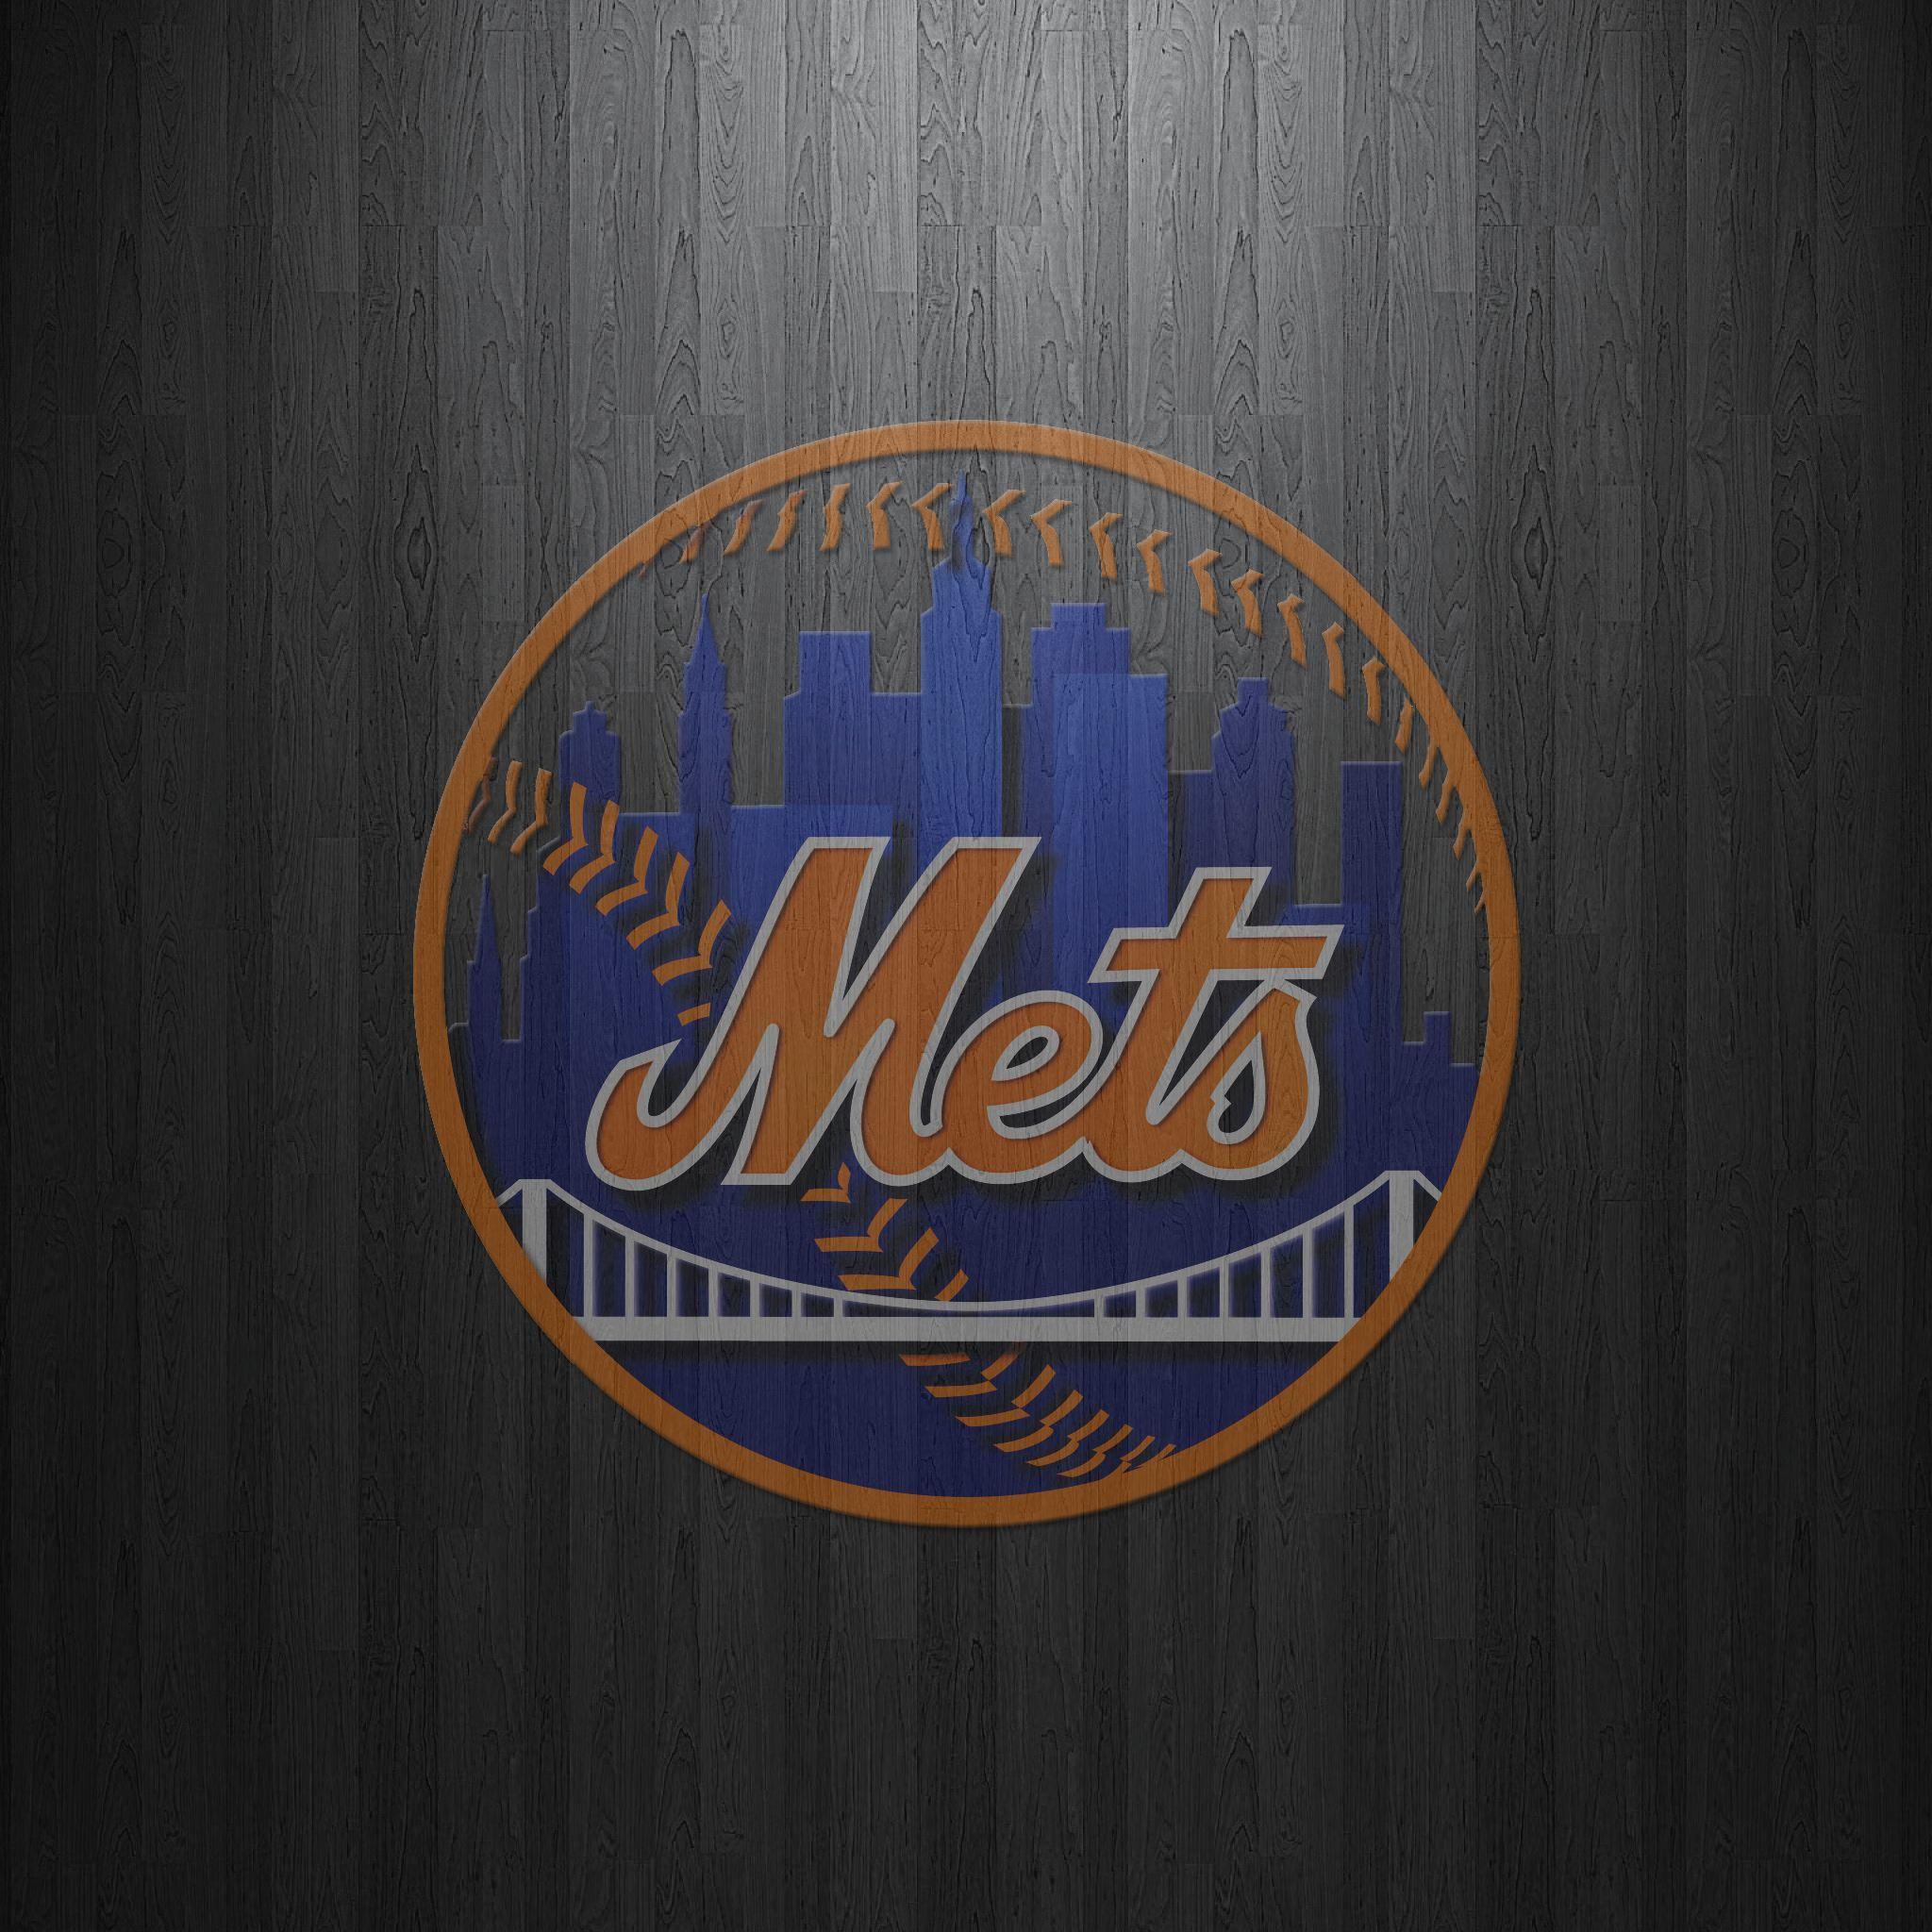 New York Mets 2021 Wallpapers - Wallpaper Cave